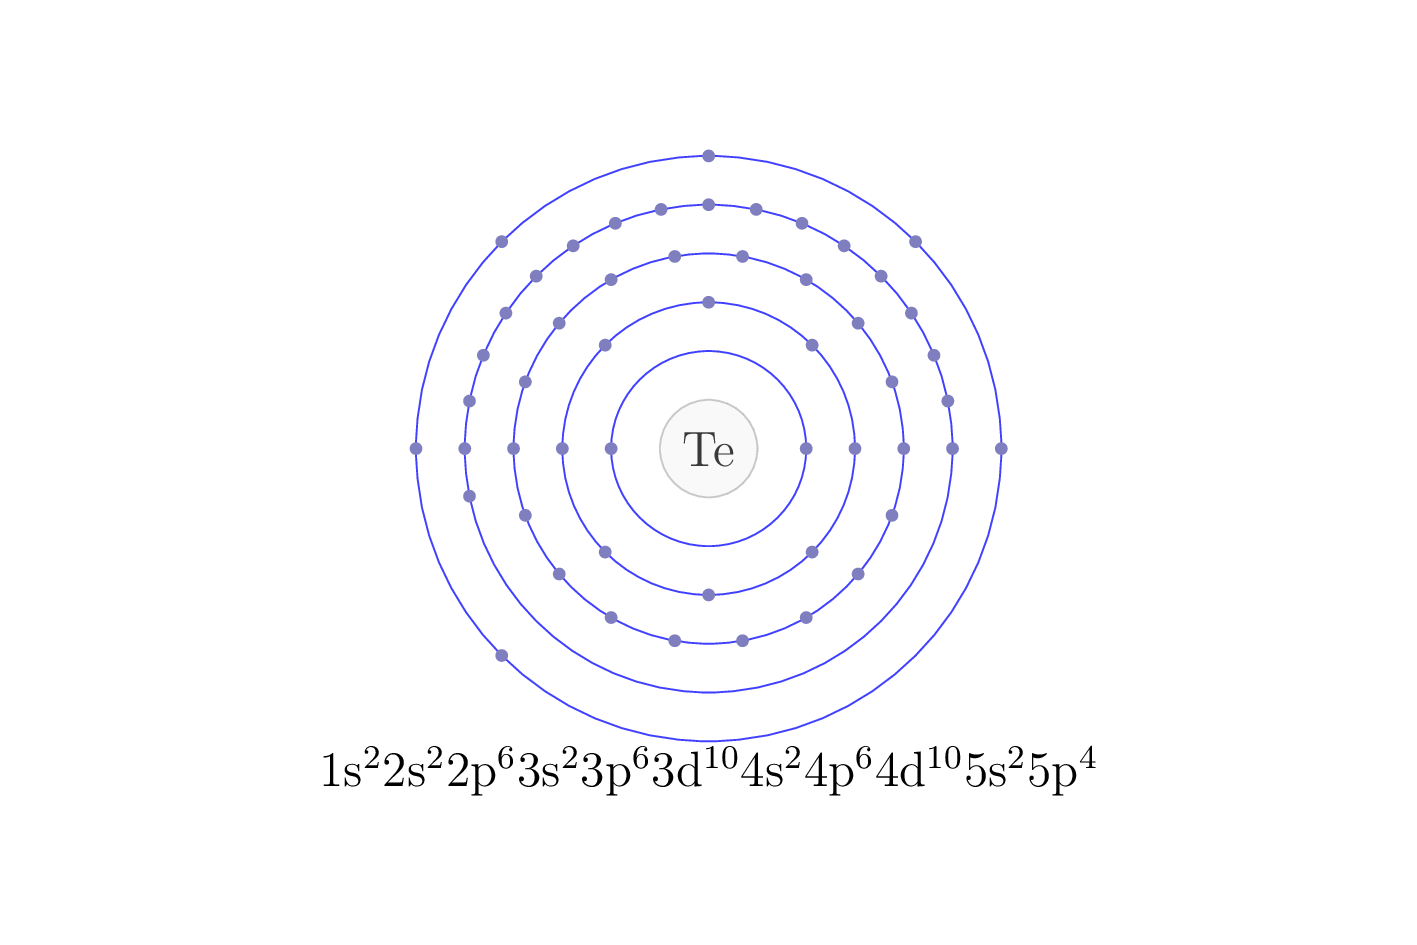 electron configuration of element Te